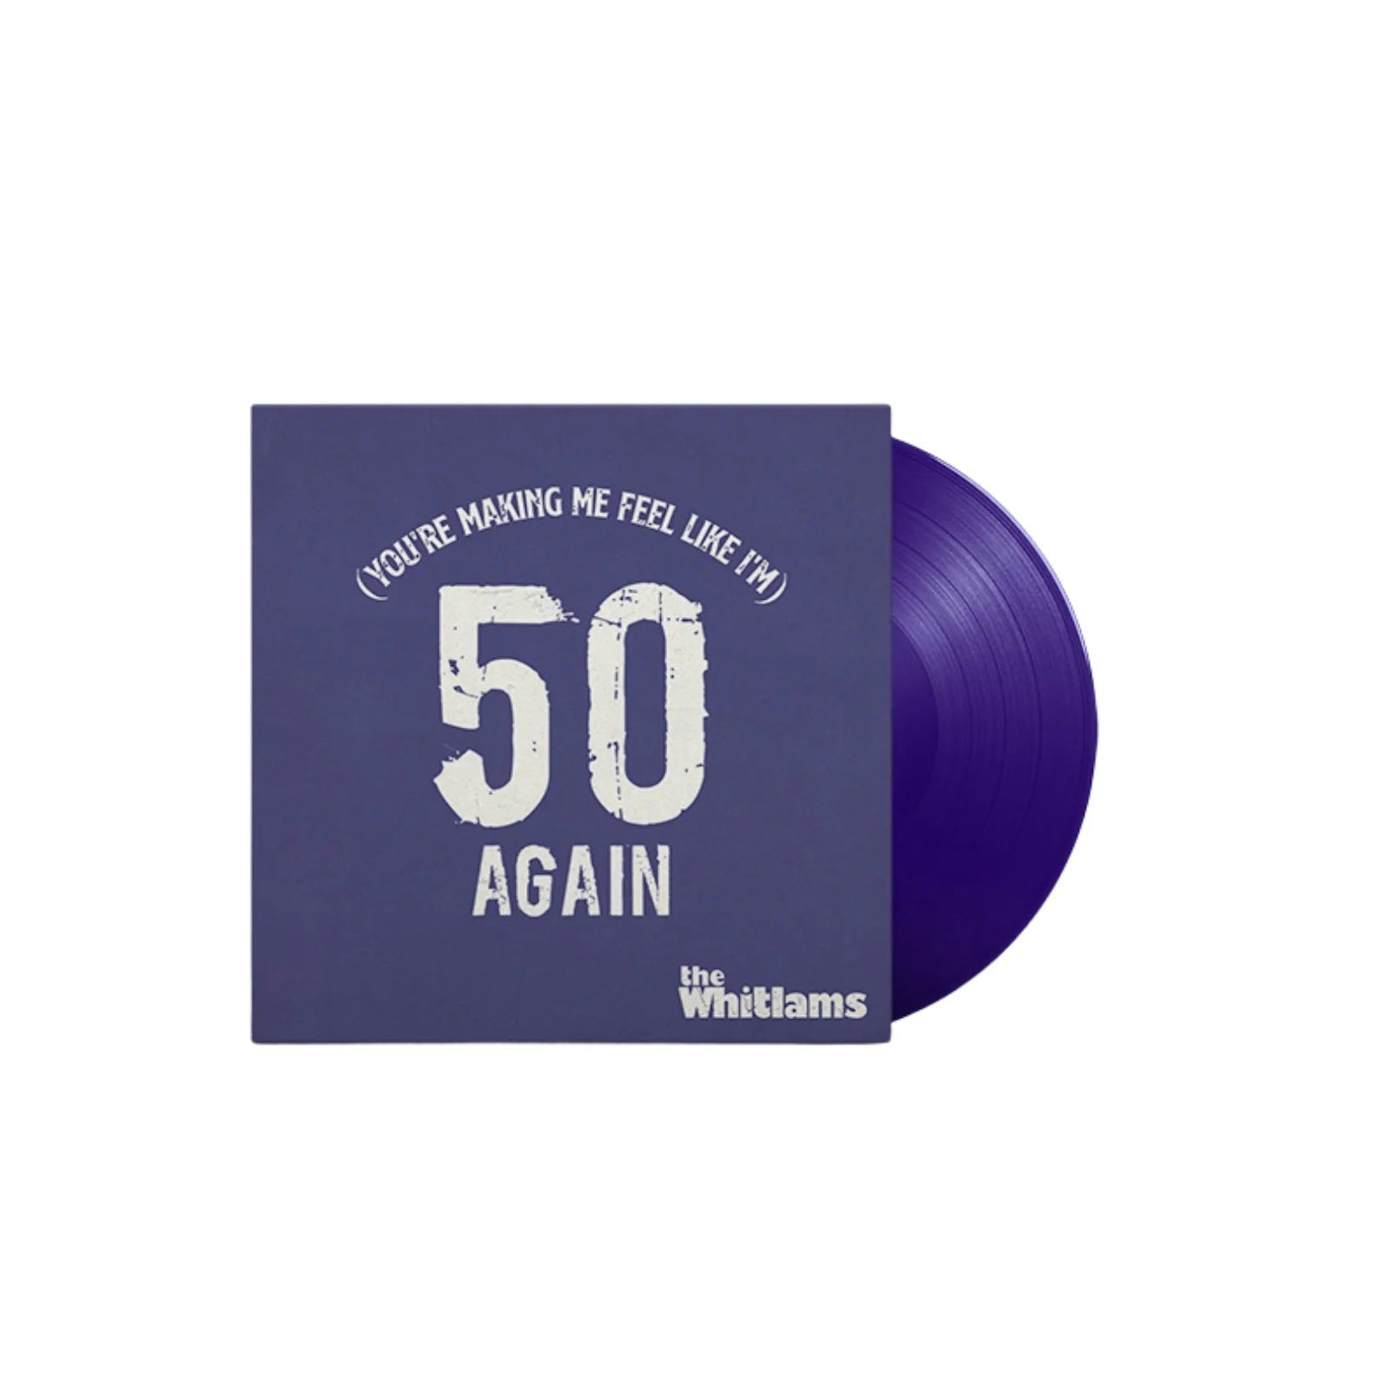 The Whitlams (You're Making Me Feel Like I'm) 50 Again (7" Vinyl)